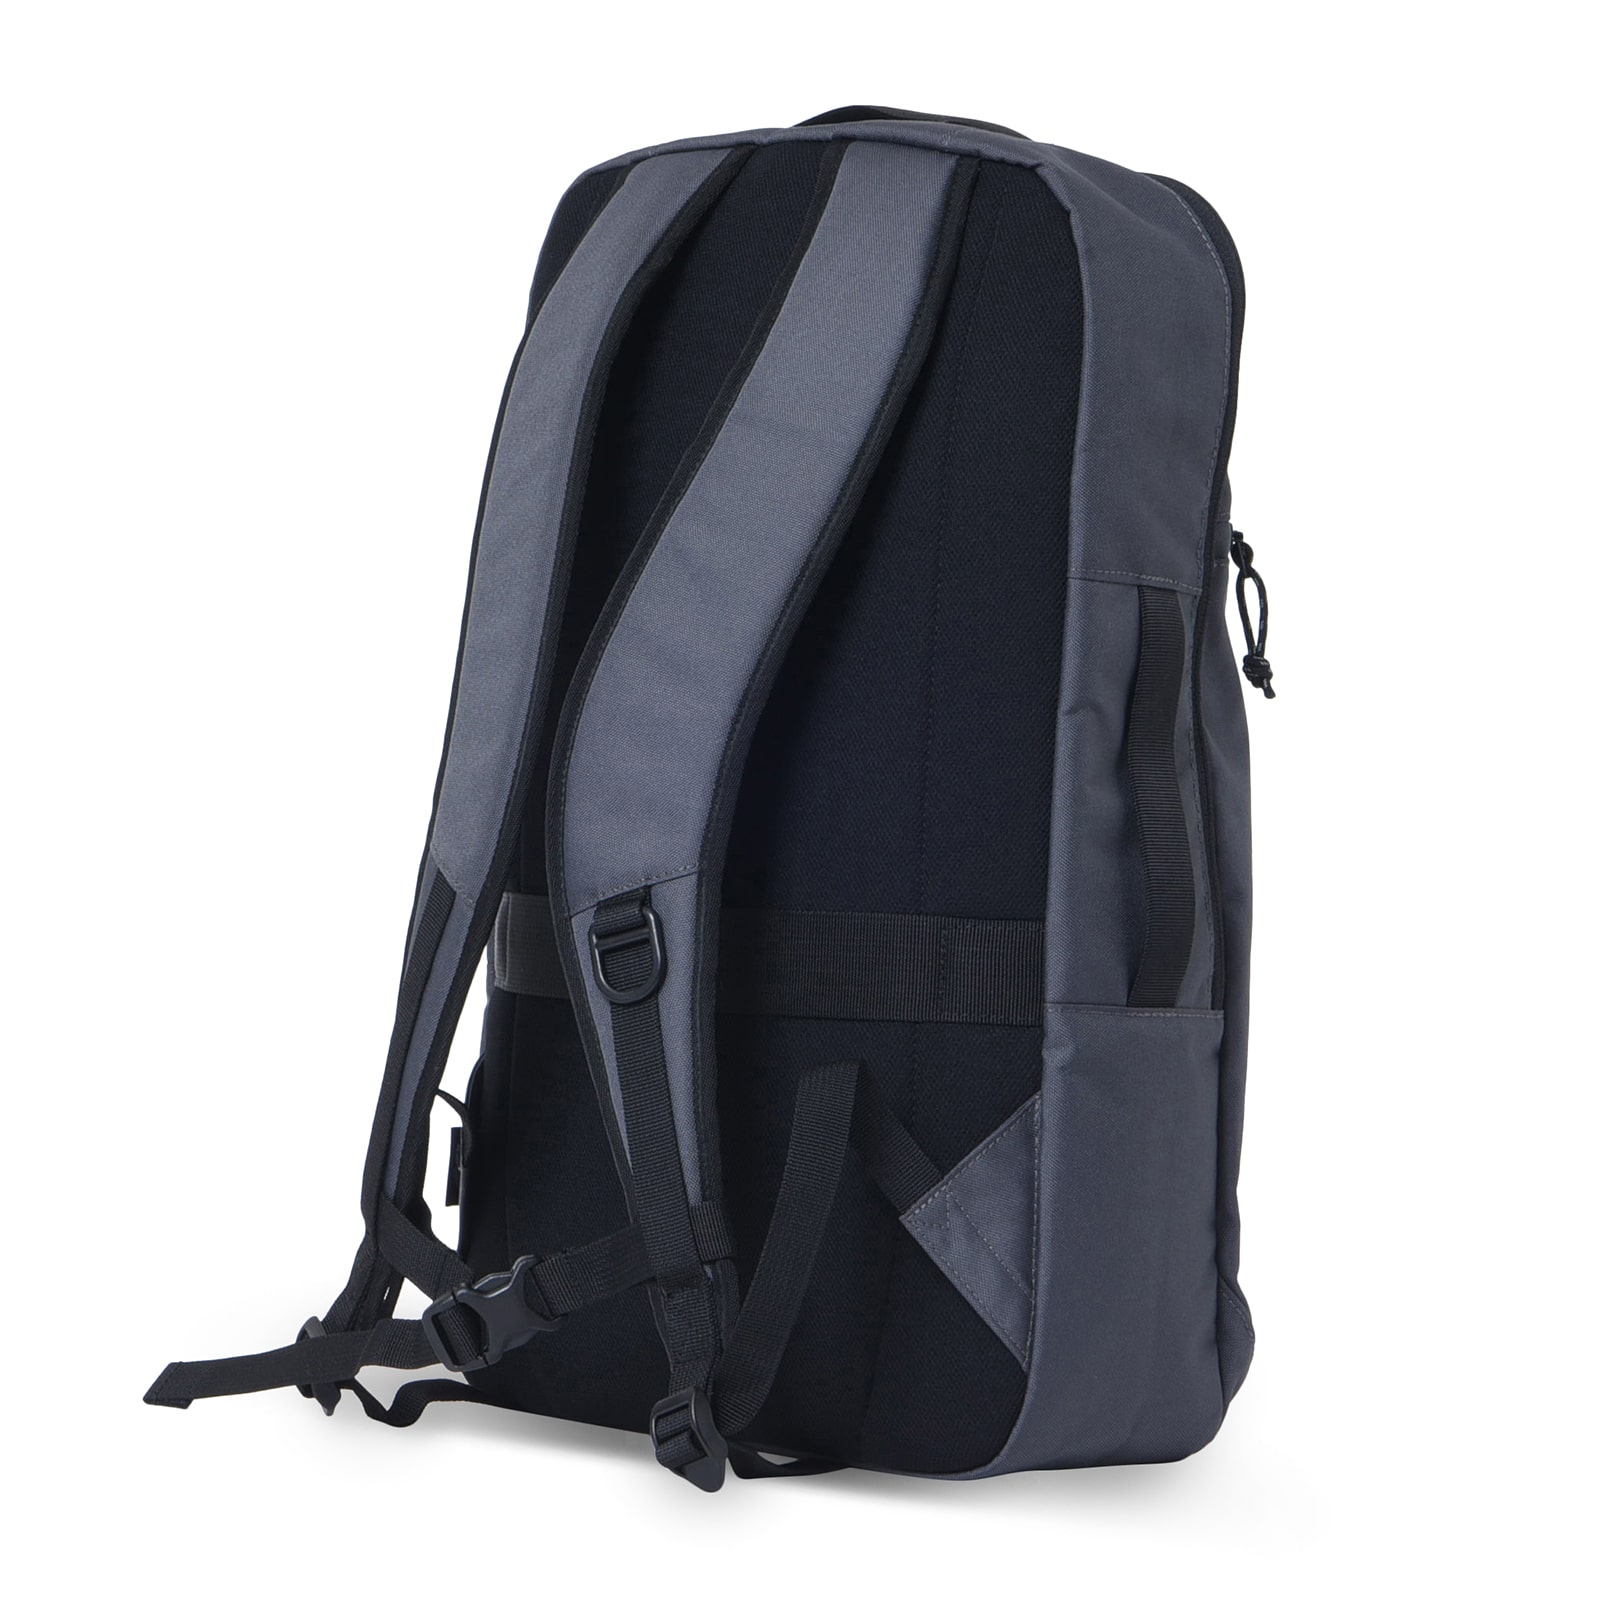 Commutation Backpack